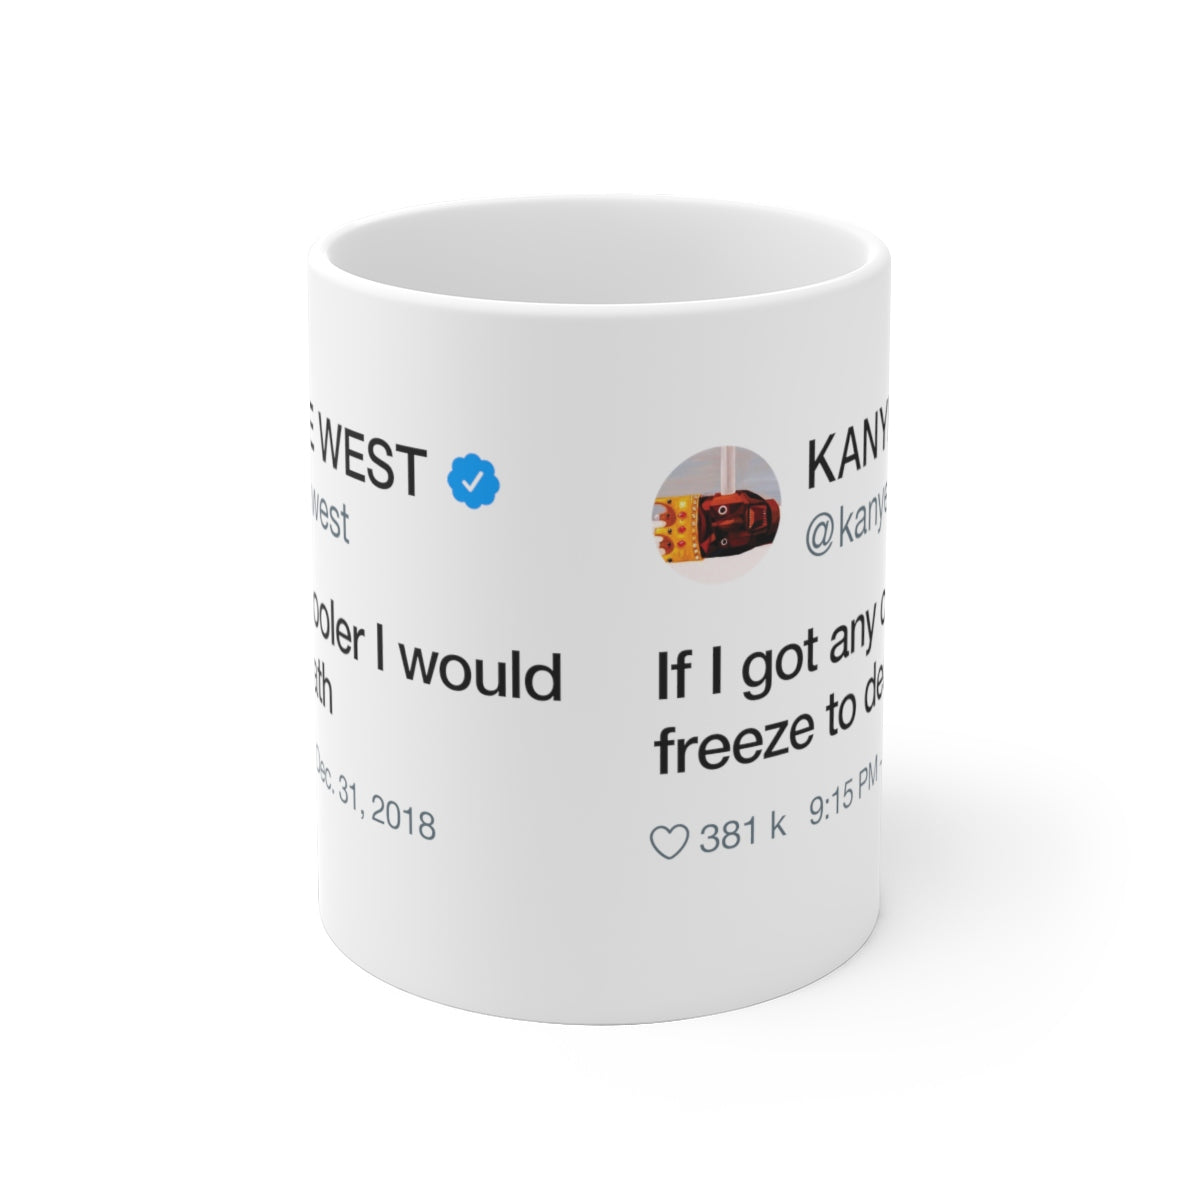 If I got any cooler I would freeze to death - Kanye West Tweet Quote Mug-Archethype